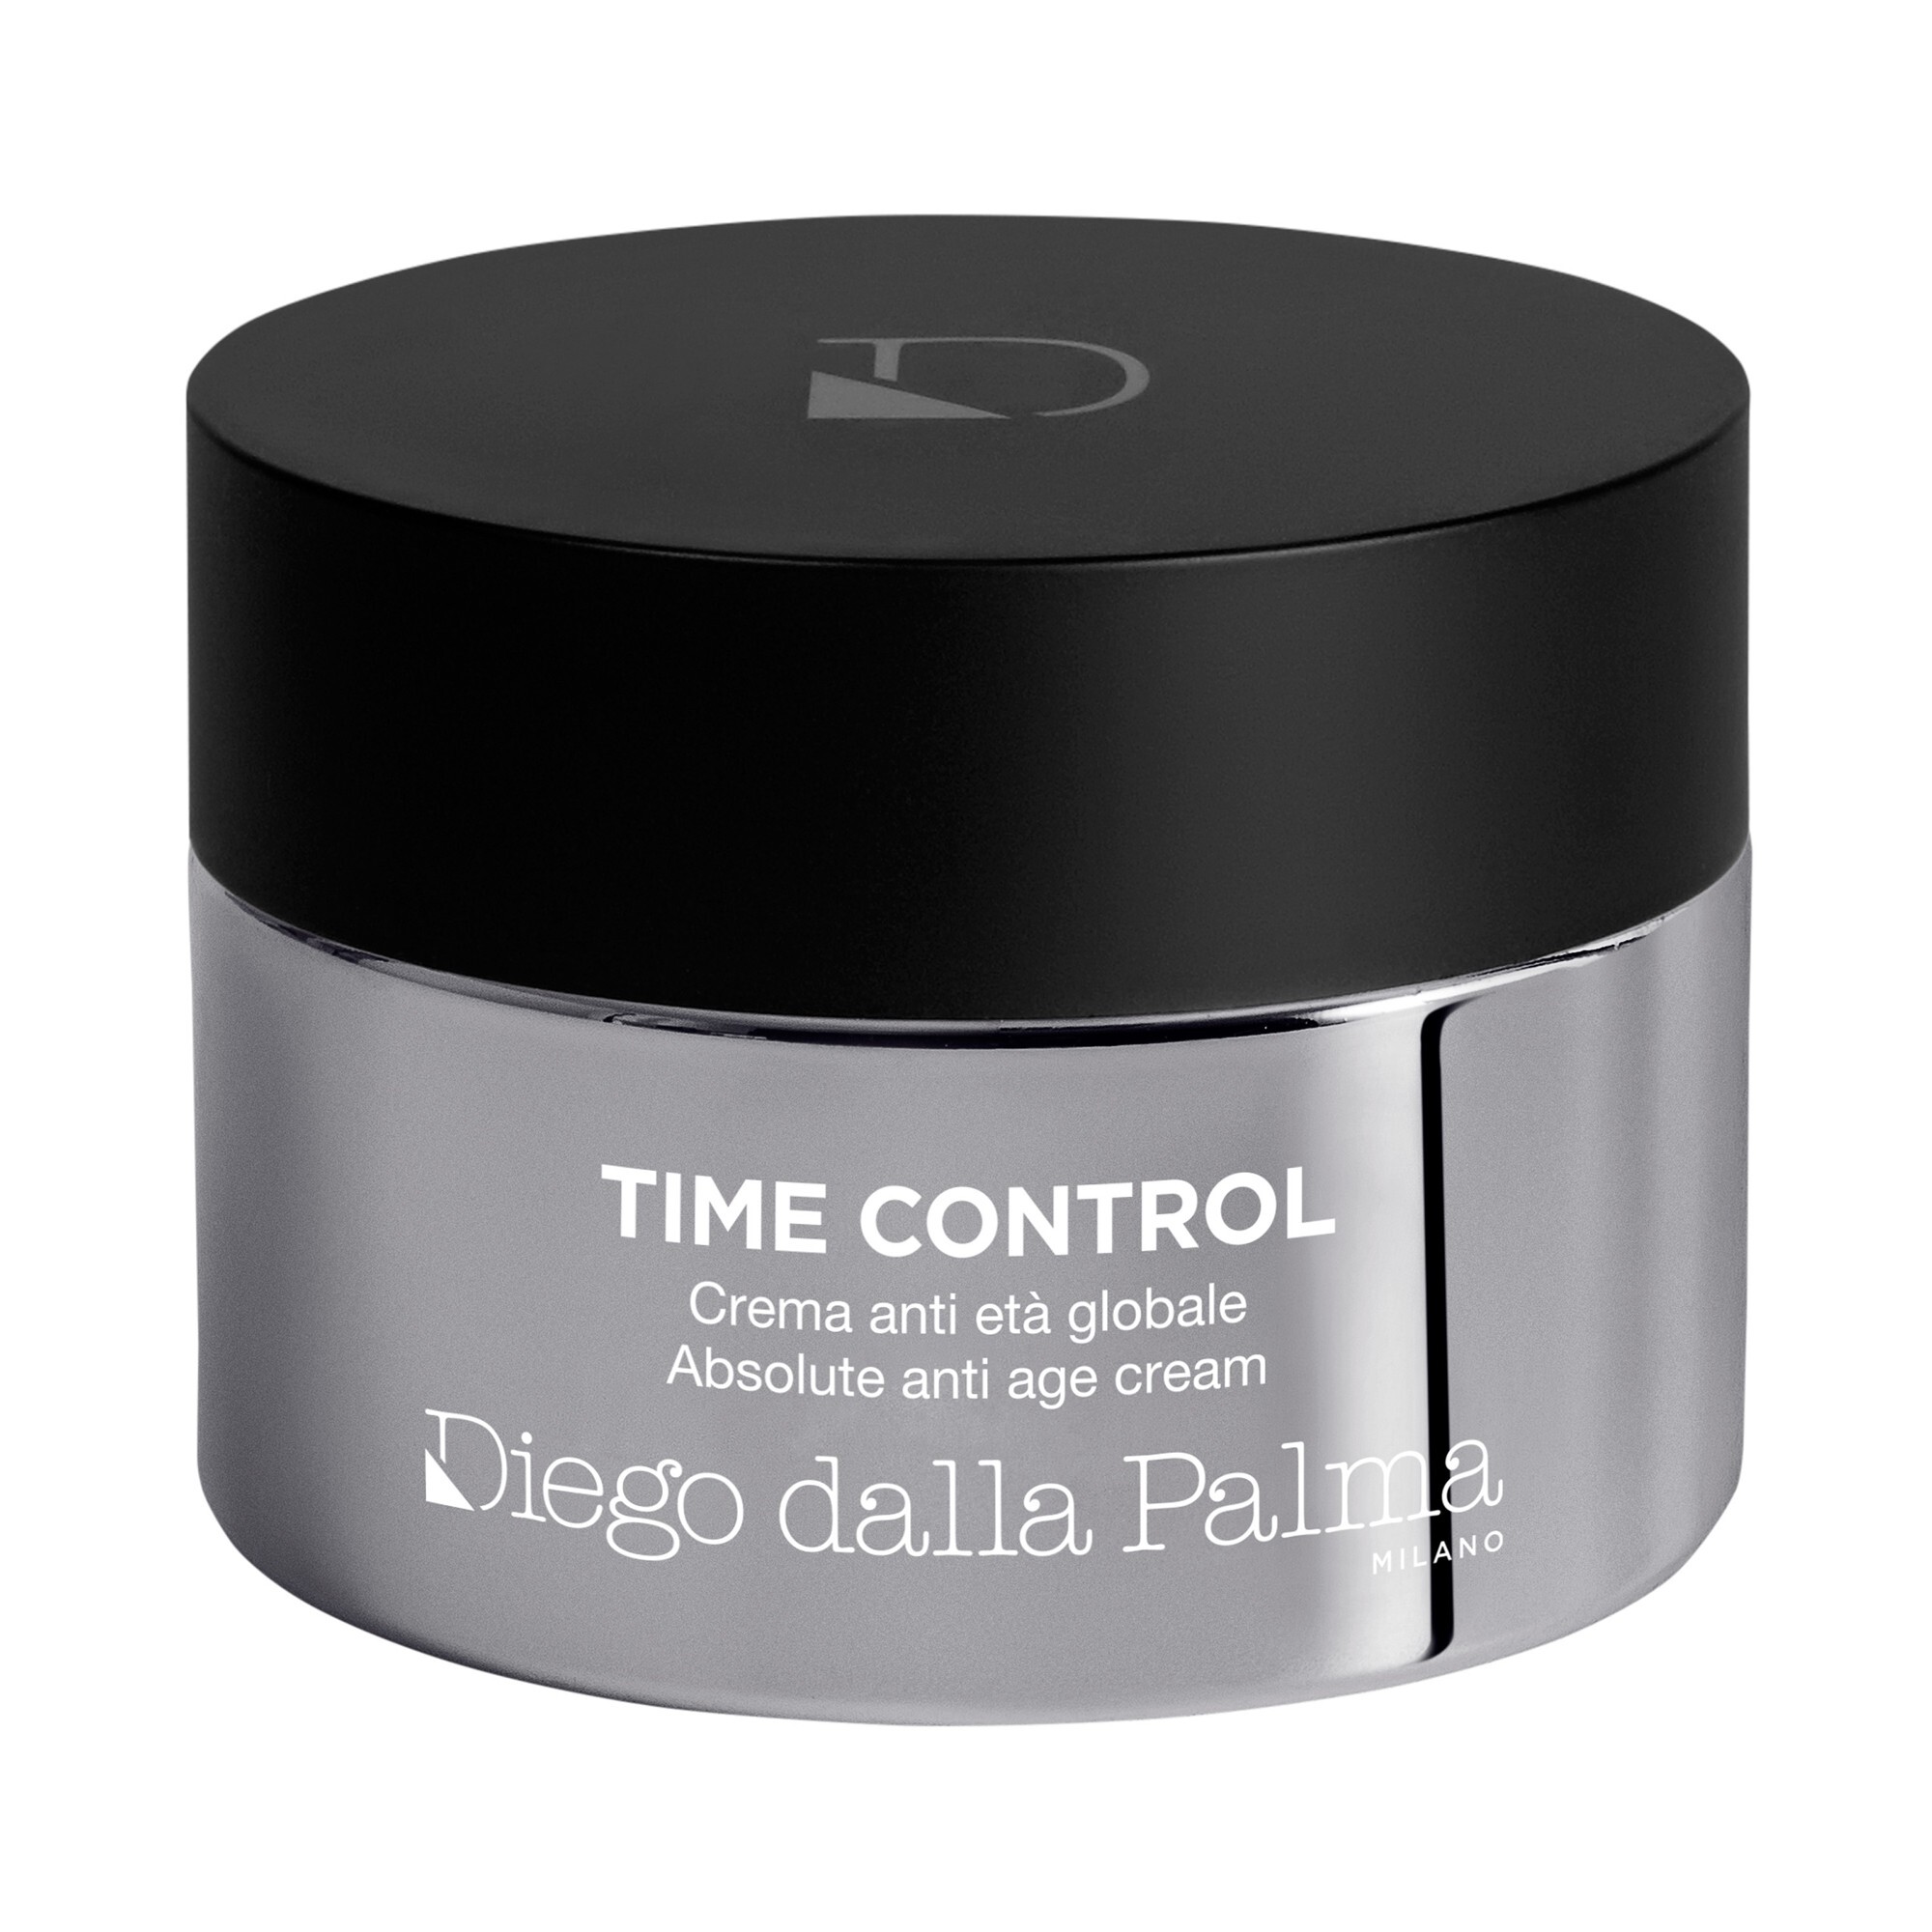 Diego Dalla Palma Time Control Absolute Anti Age Cream